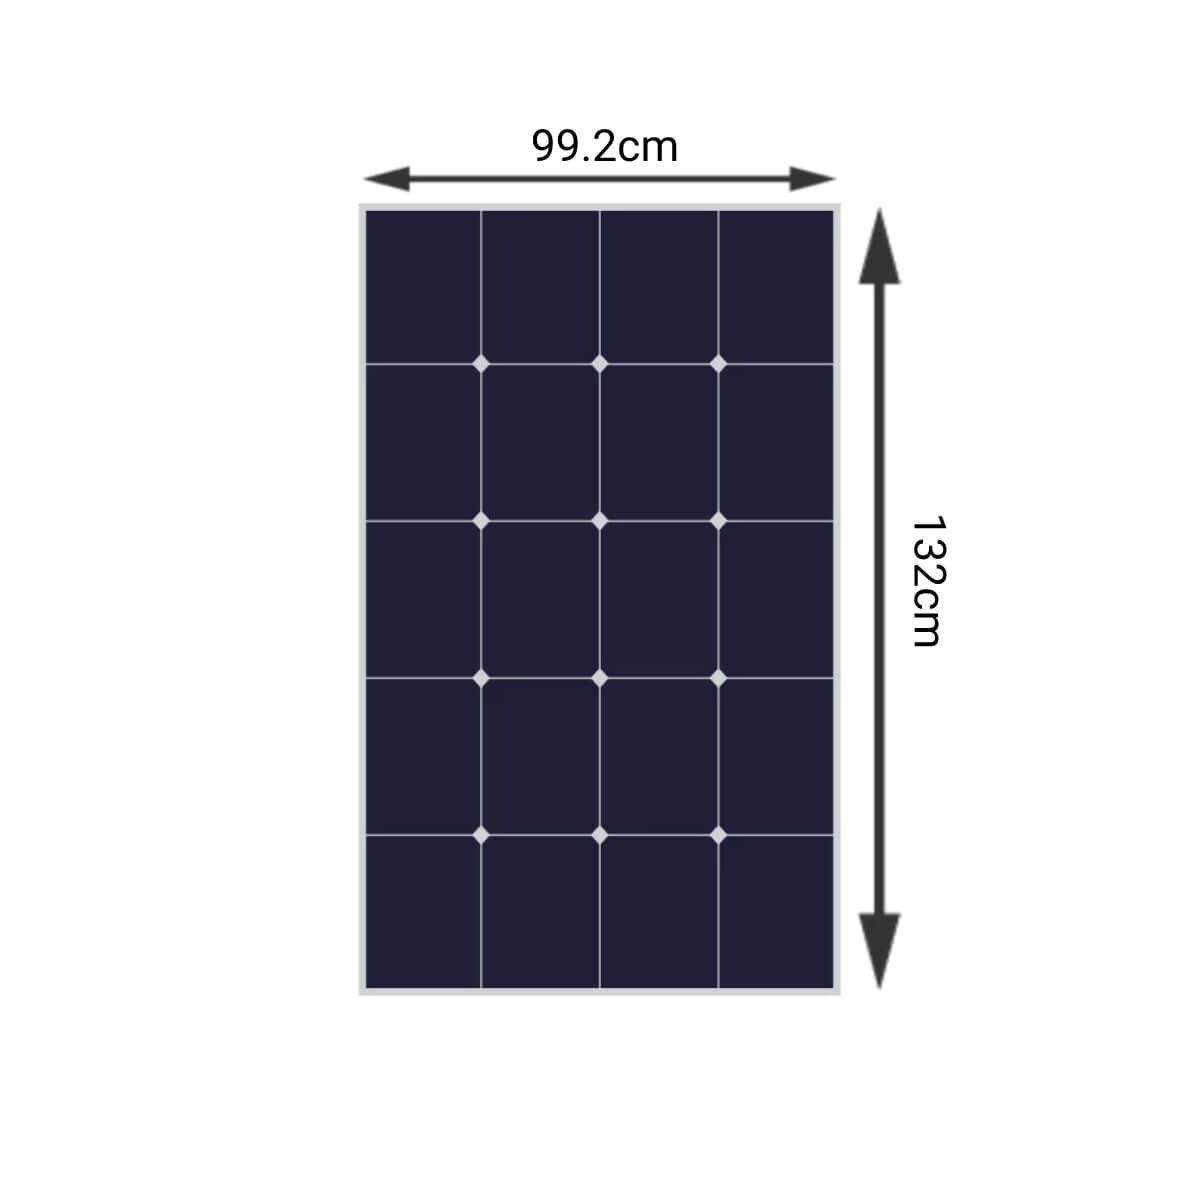 200W Solar Panel Kit – 1x 200W dimensions